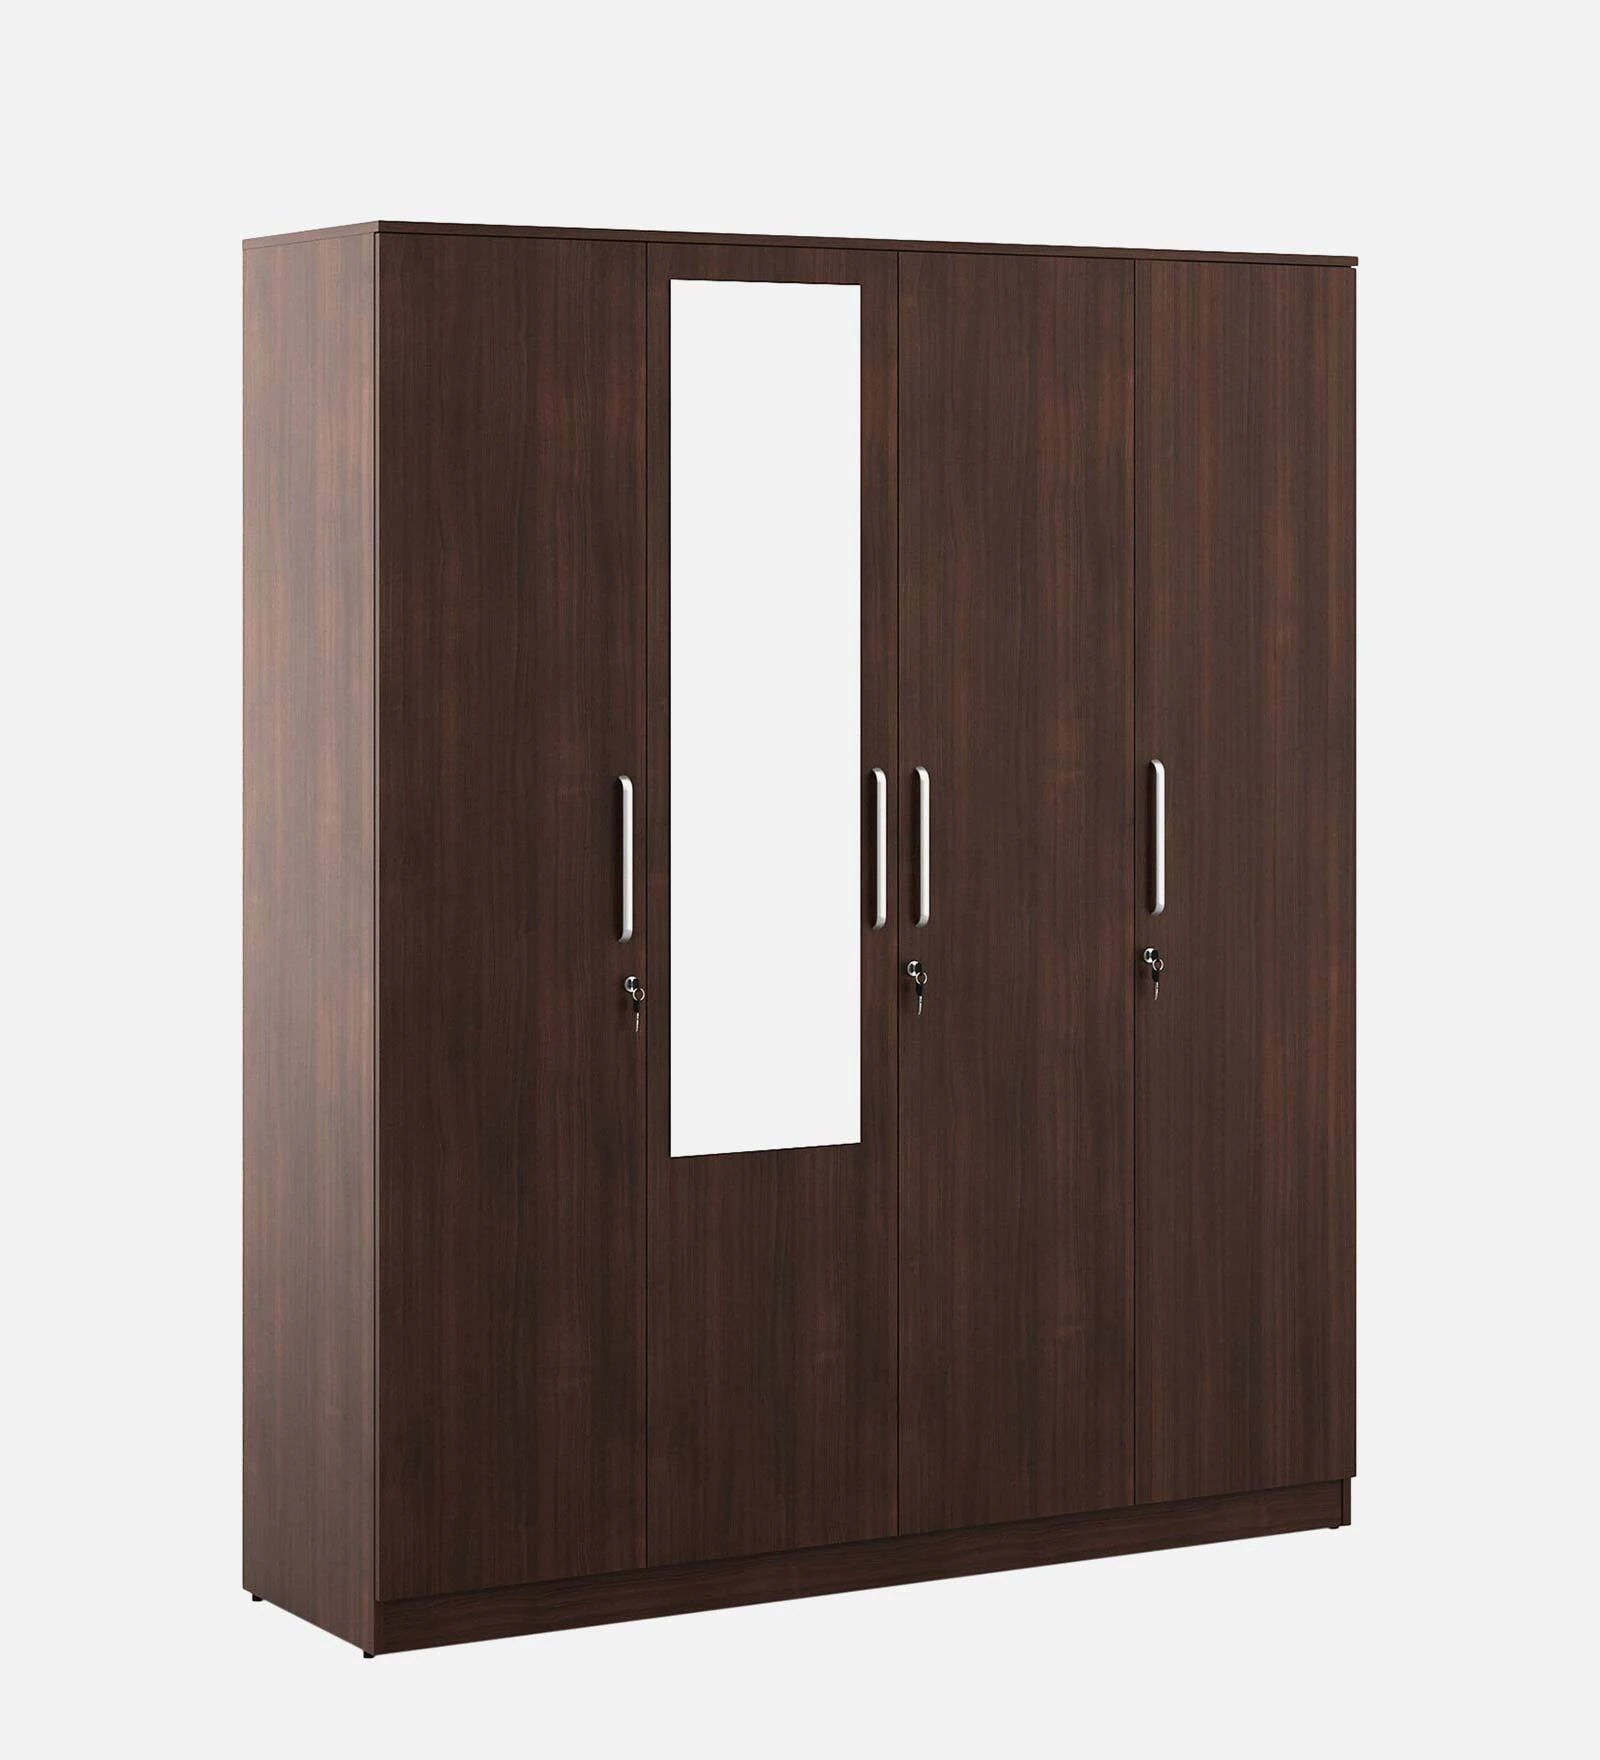 Regato Walnut Secure 4-Door Wardrobe with Reflect and Lock